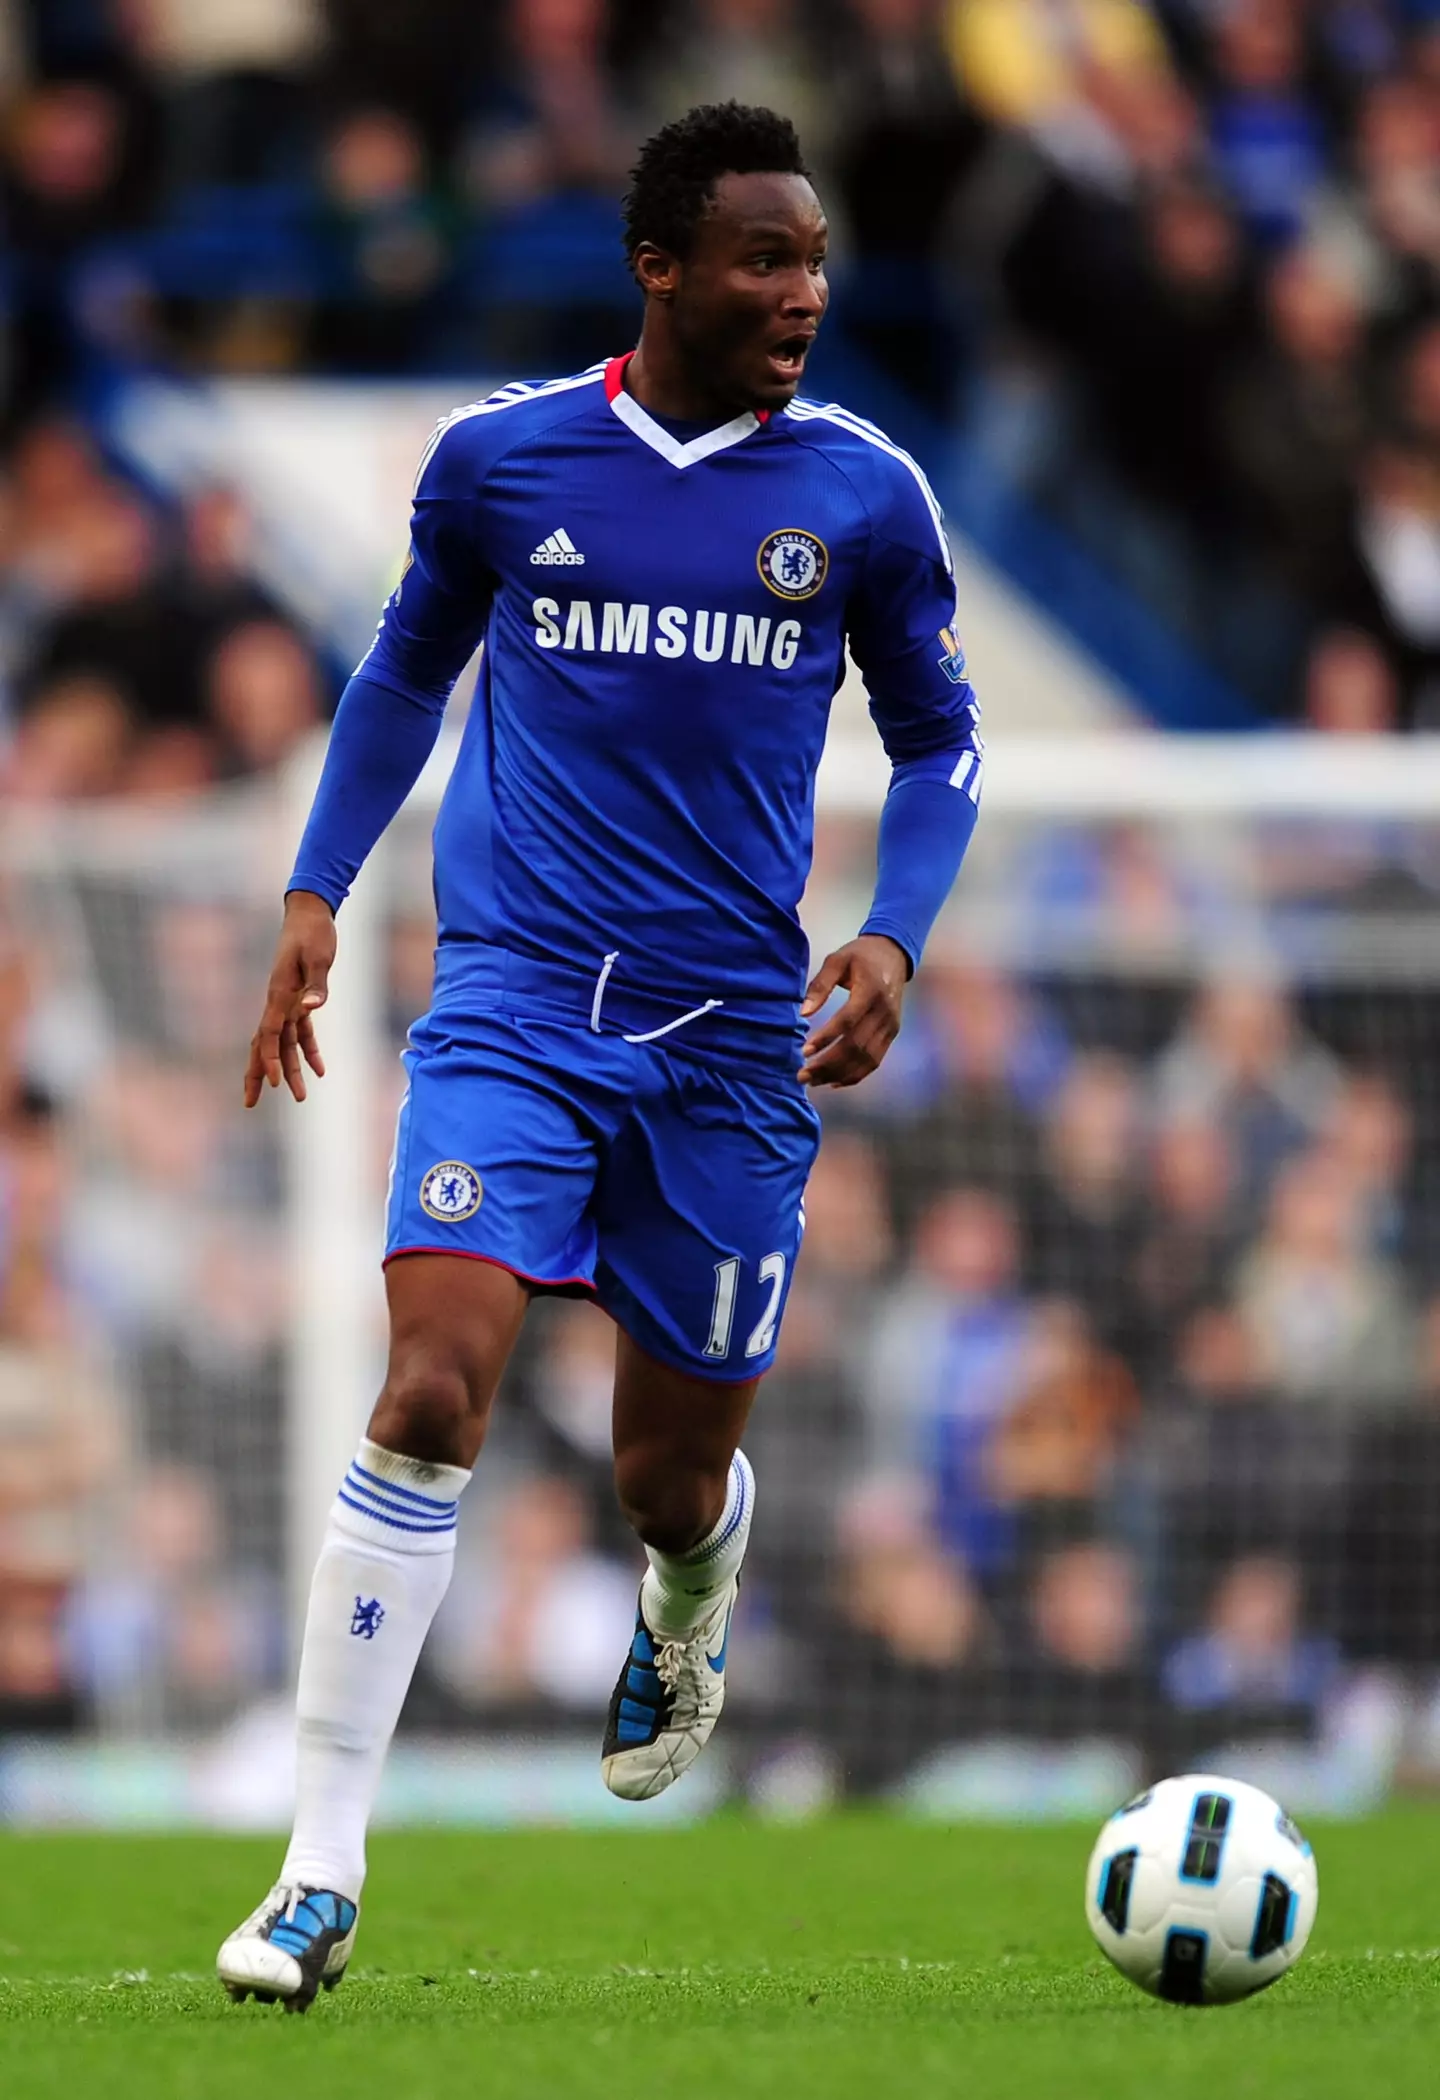 John Obi Mikel on the ball for Chelsea against Arsenal. (Alamy)